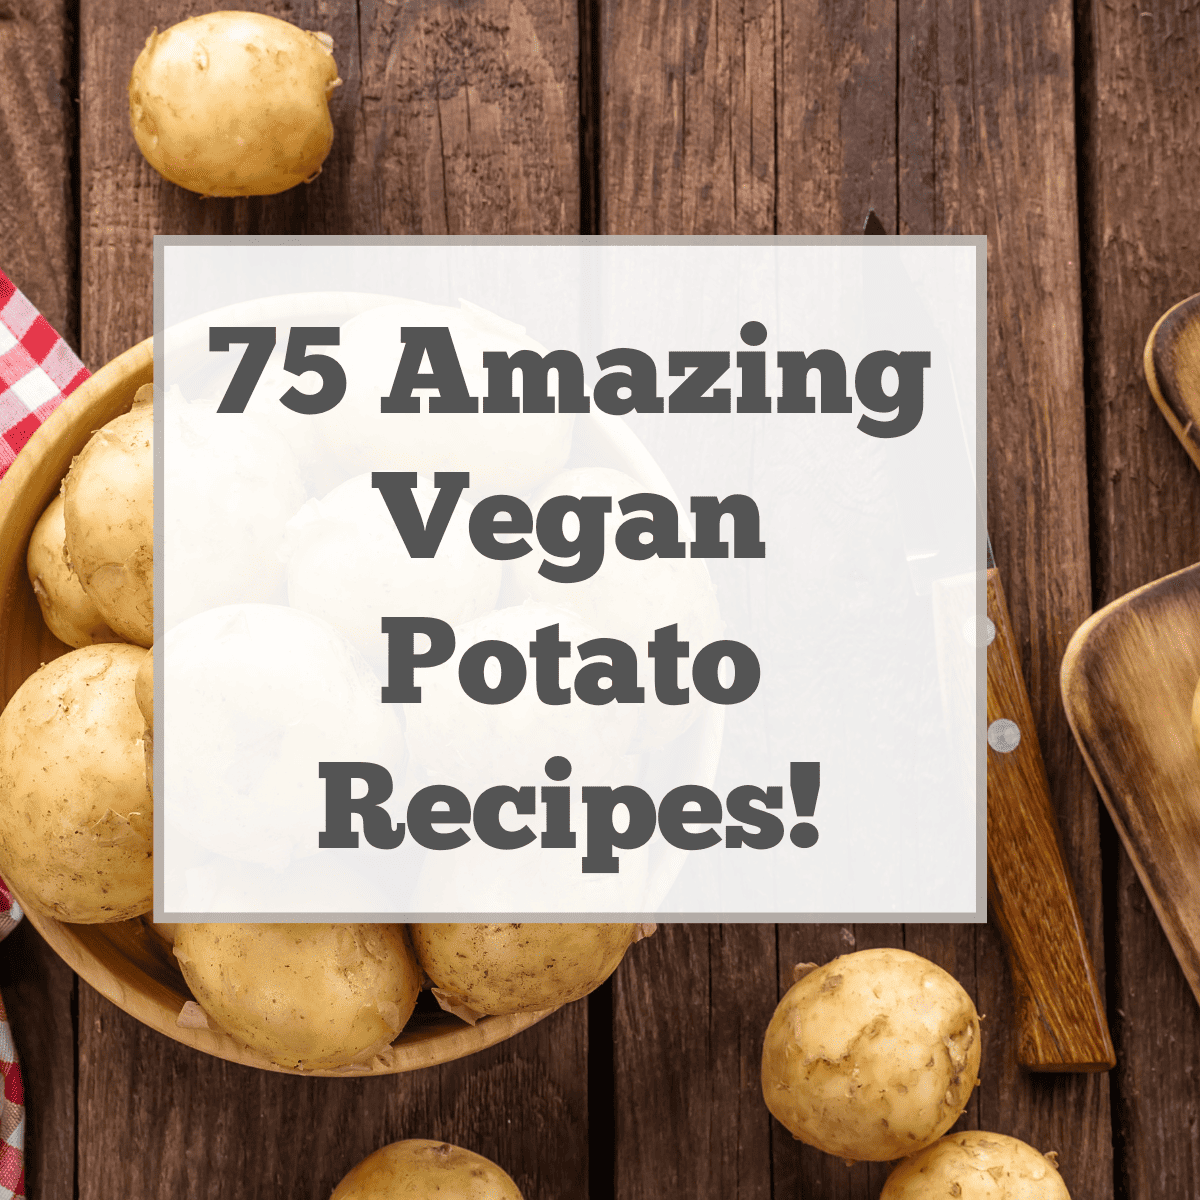 Amazing vegan potato recipes.